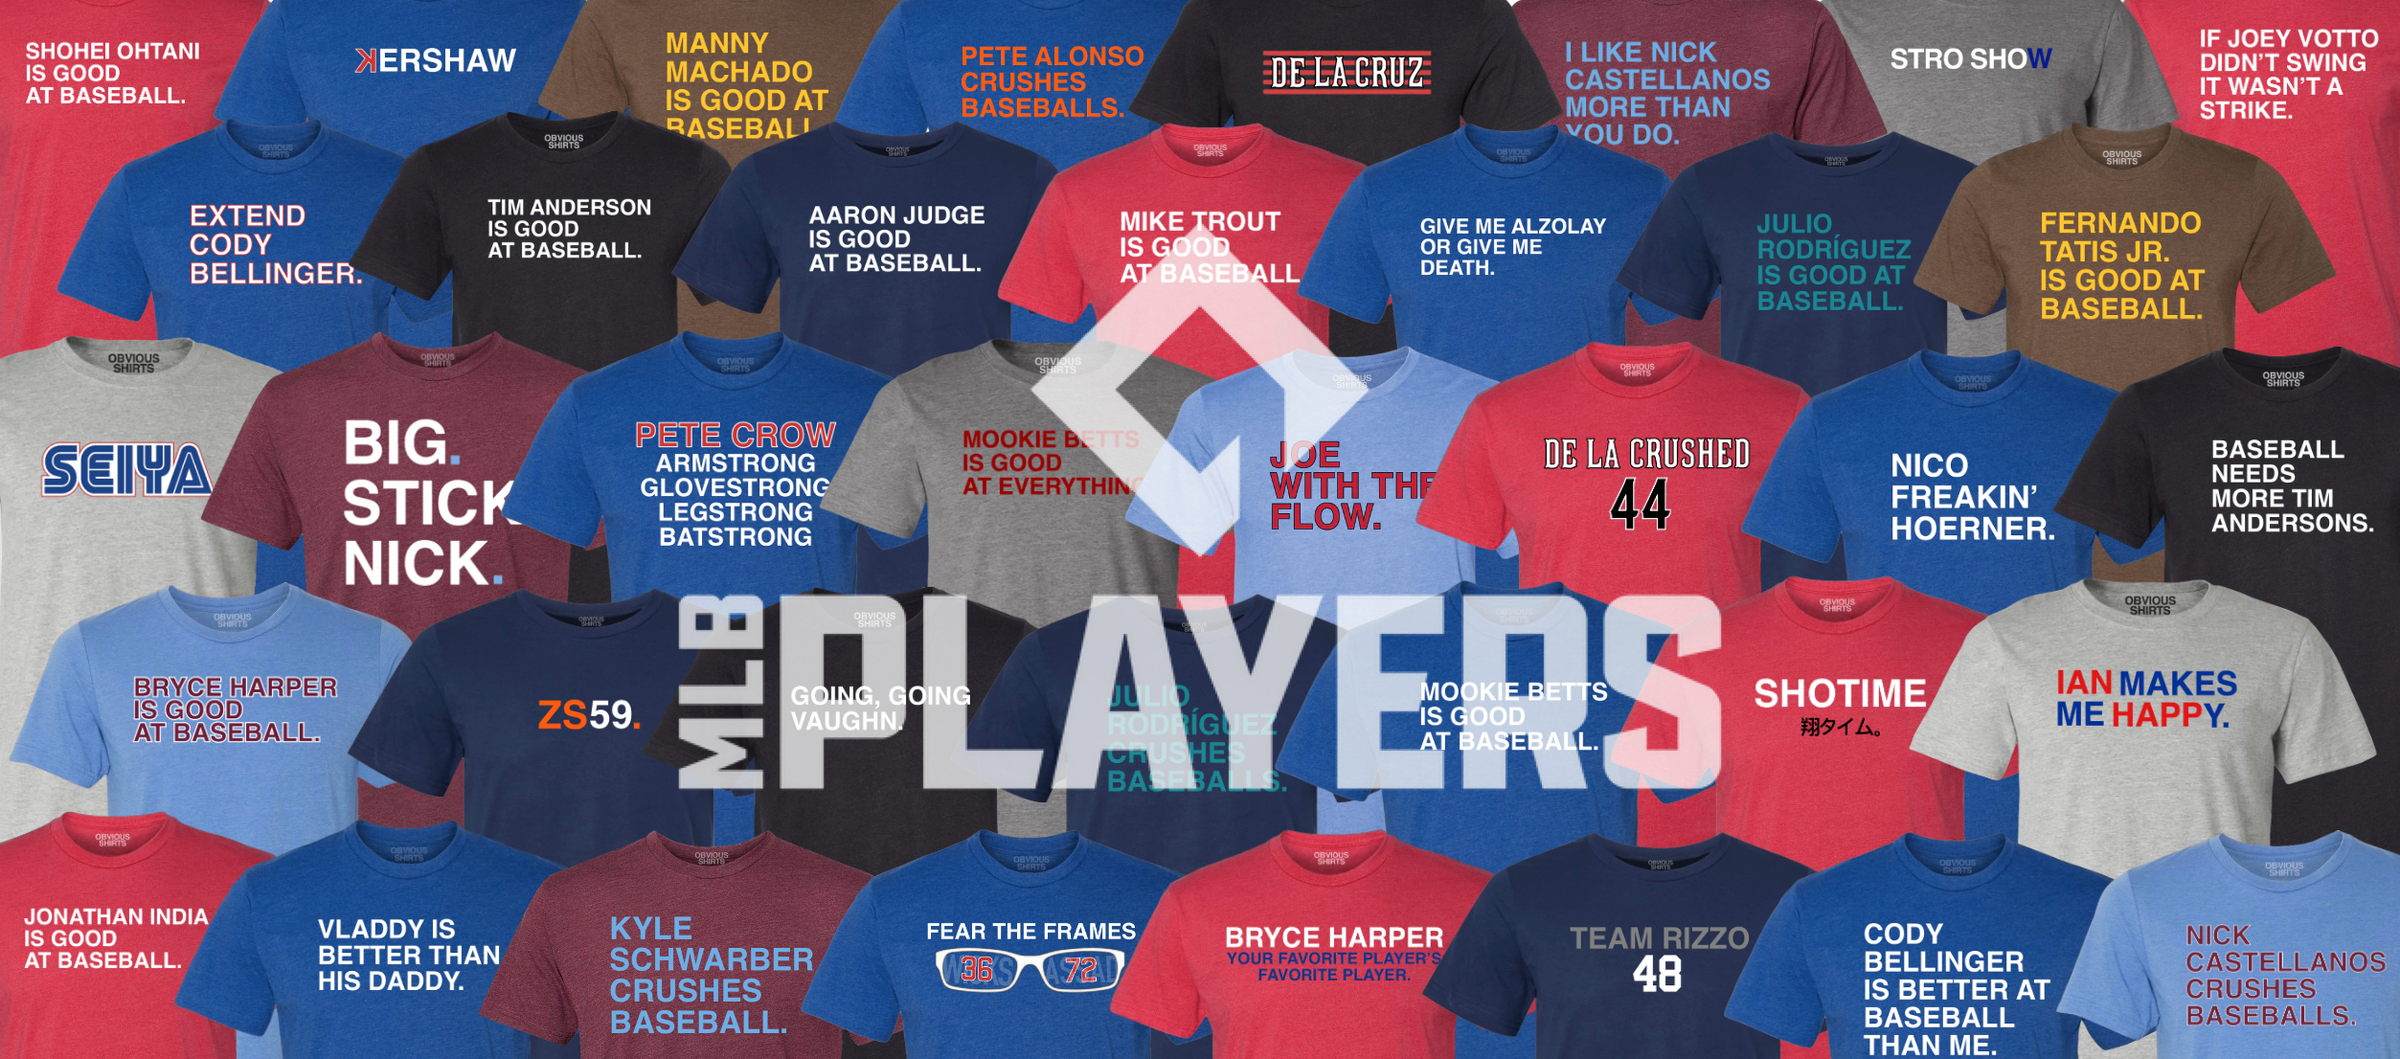 Baseball Mom Shirt - Personalized Baseball Mom T-Shirt | ILYB Designs S / Add Name